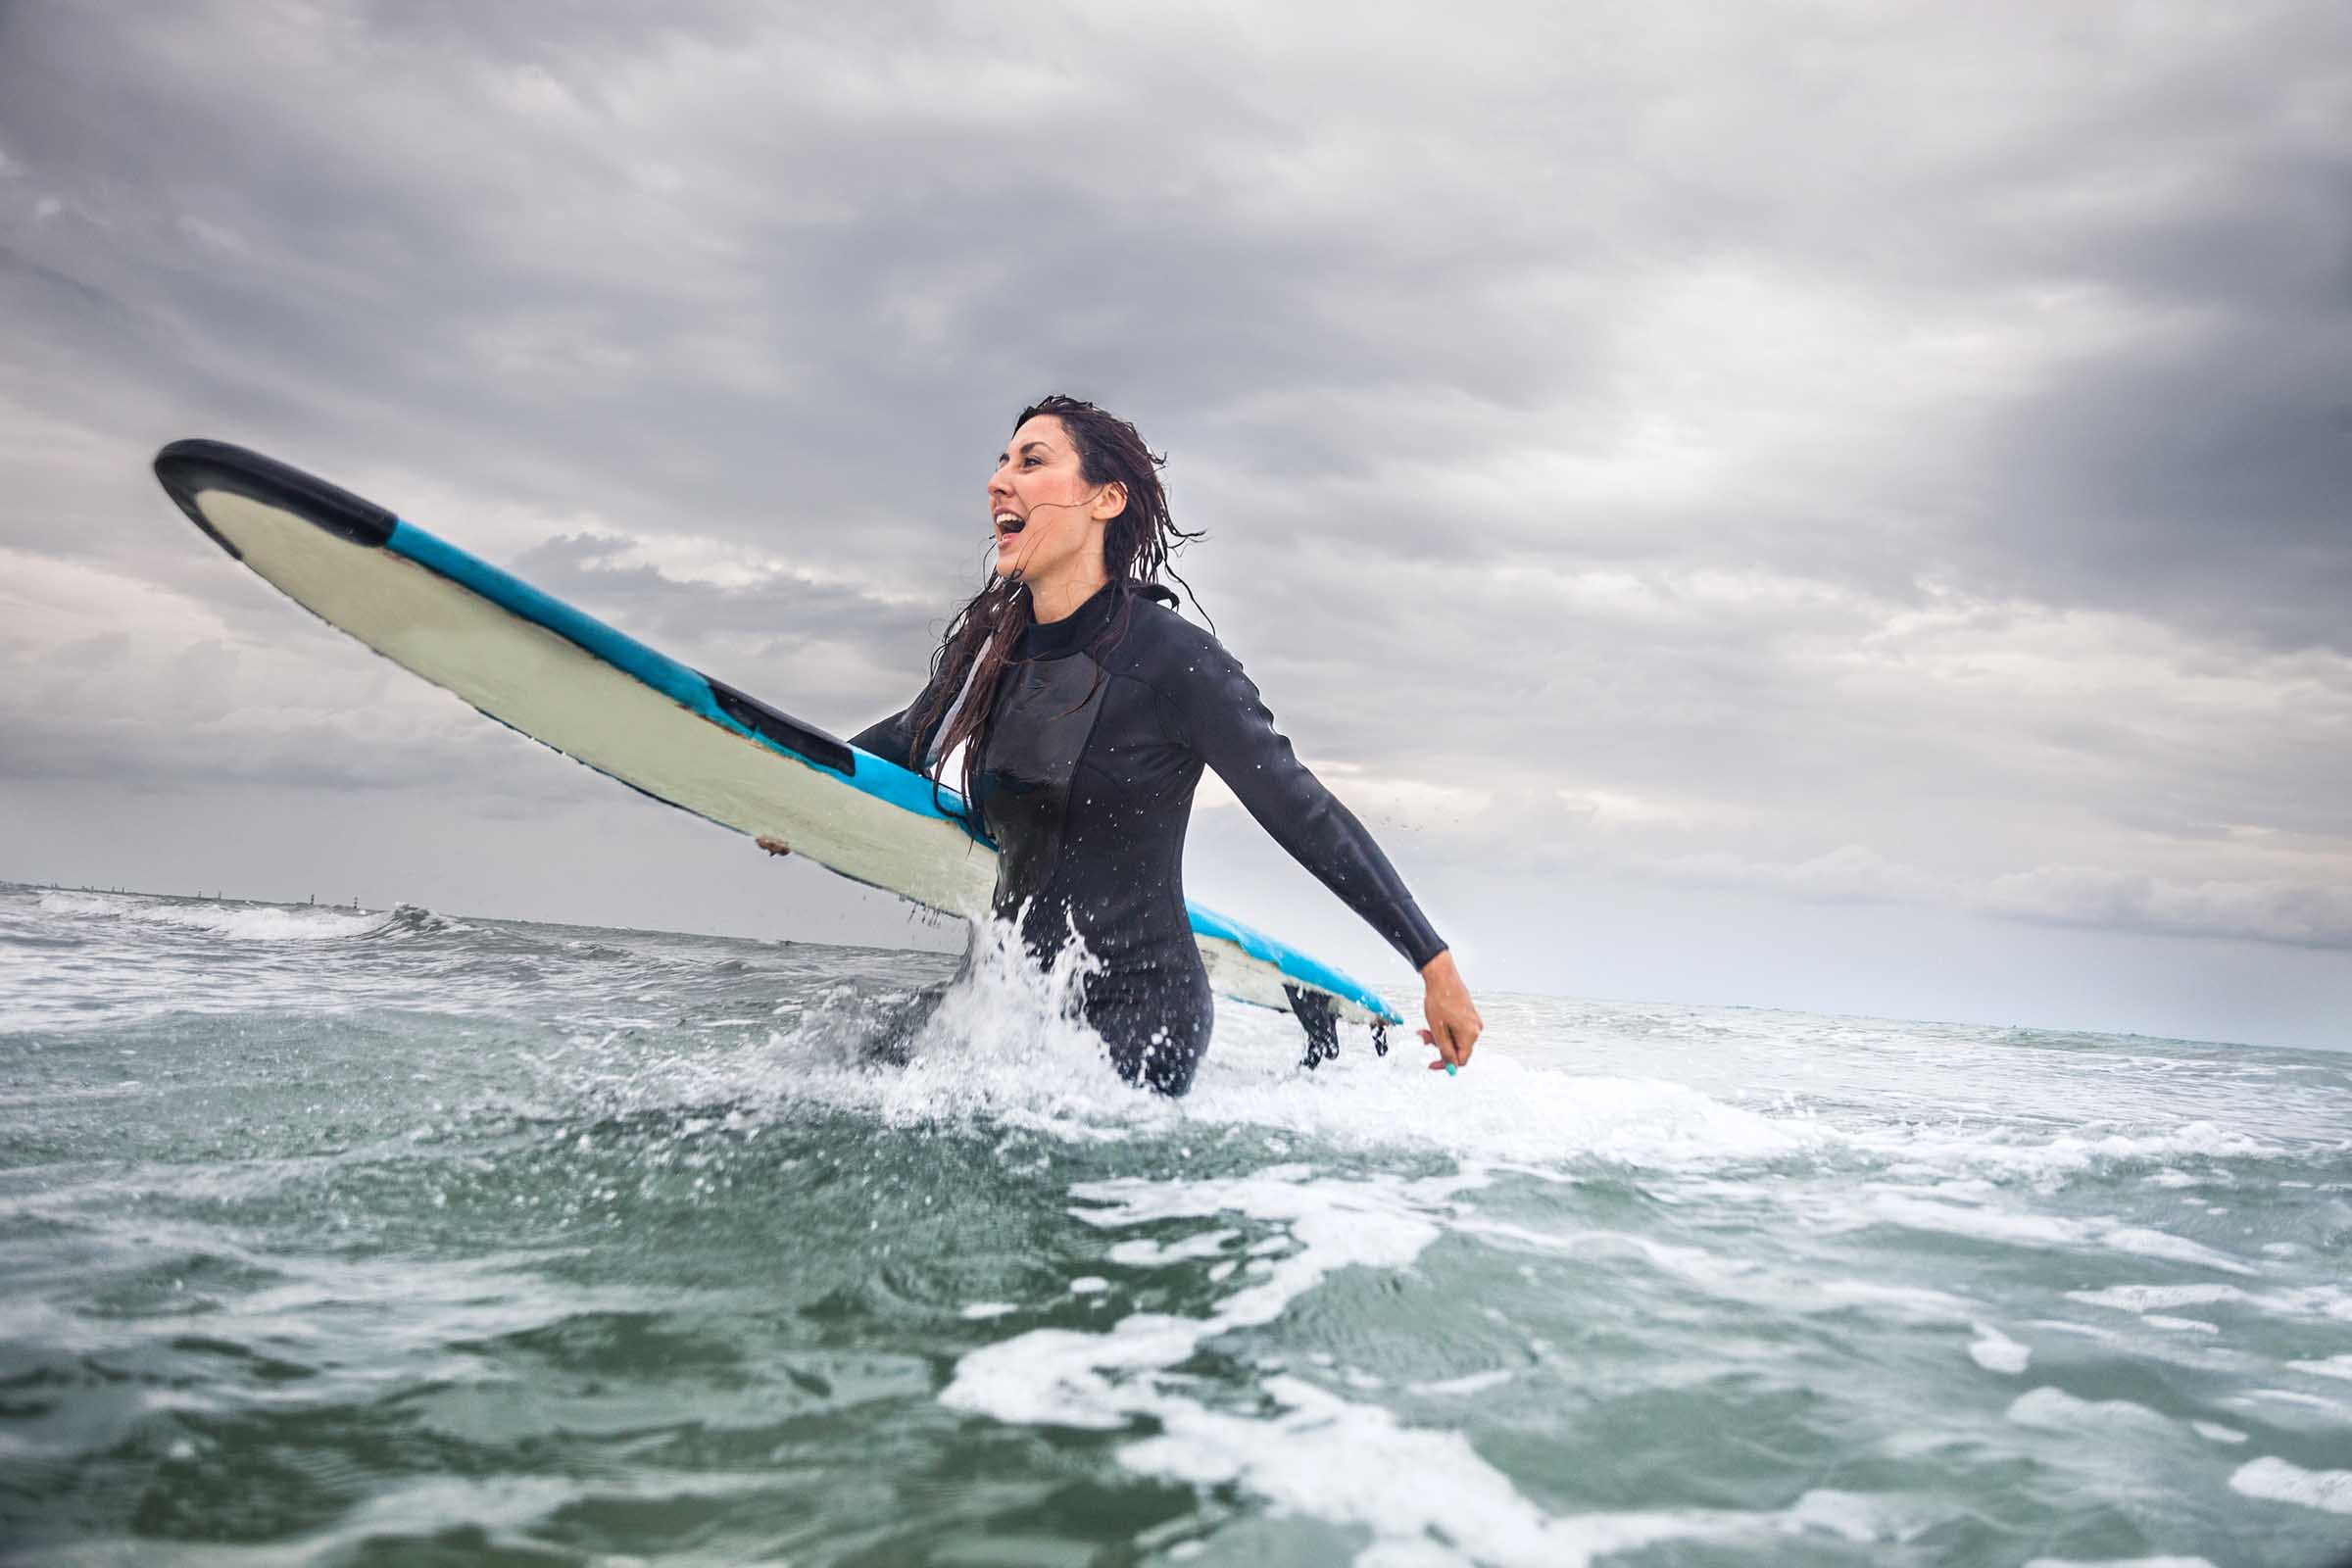 Woman in water with longboard